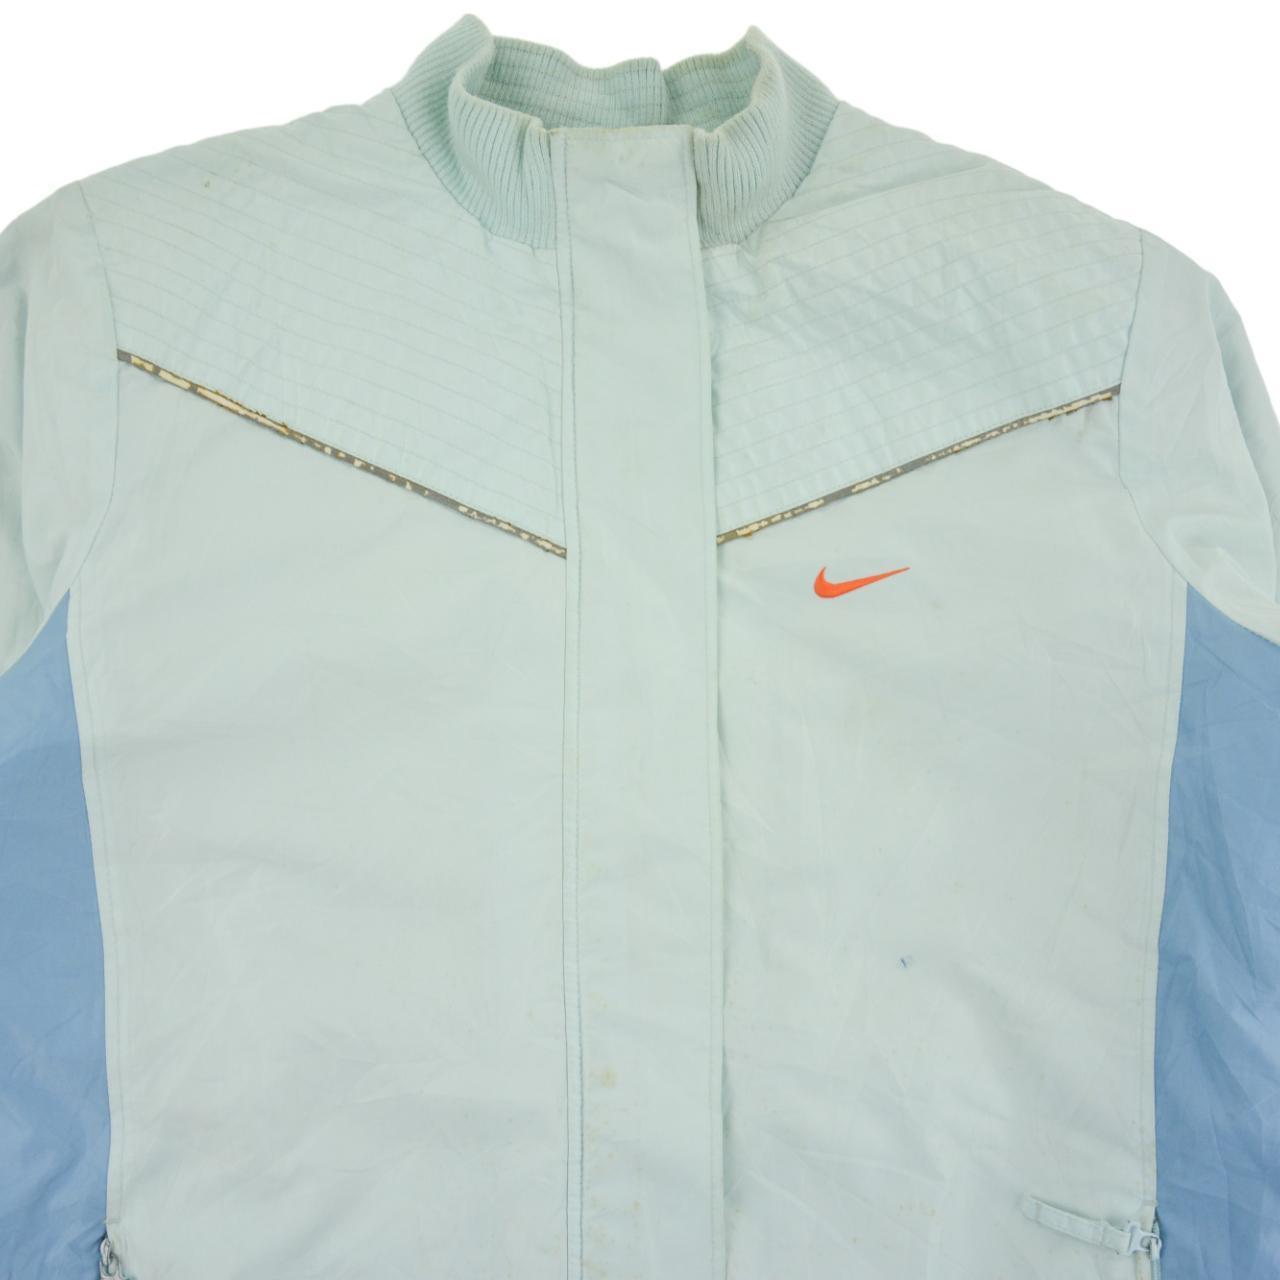 Vintage Nike Jacket Size M - Known Source